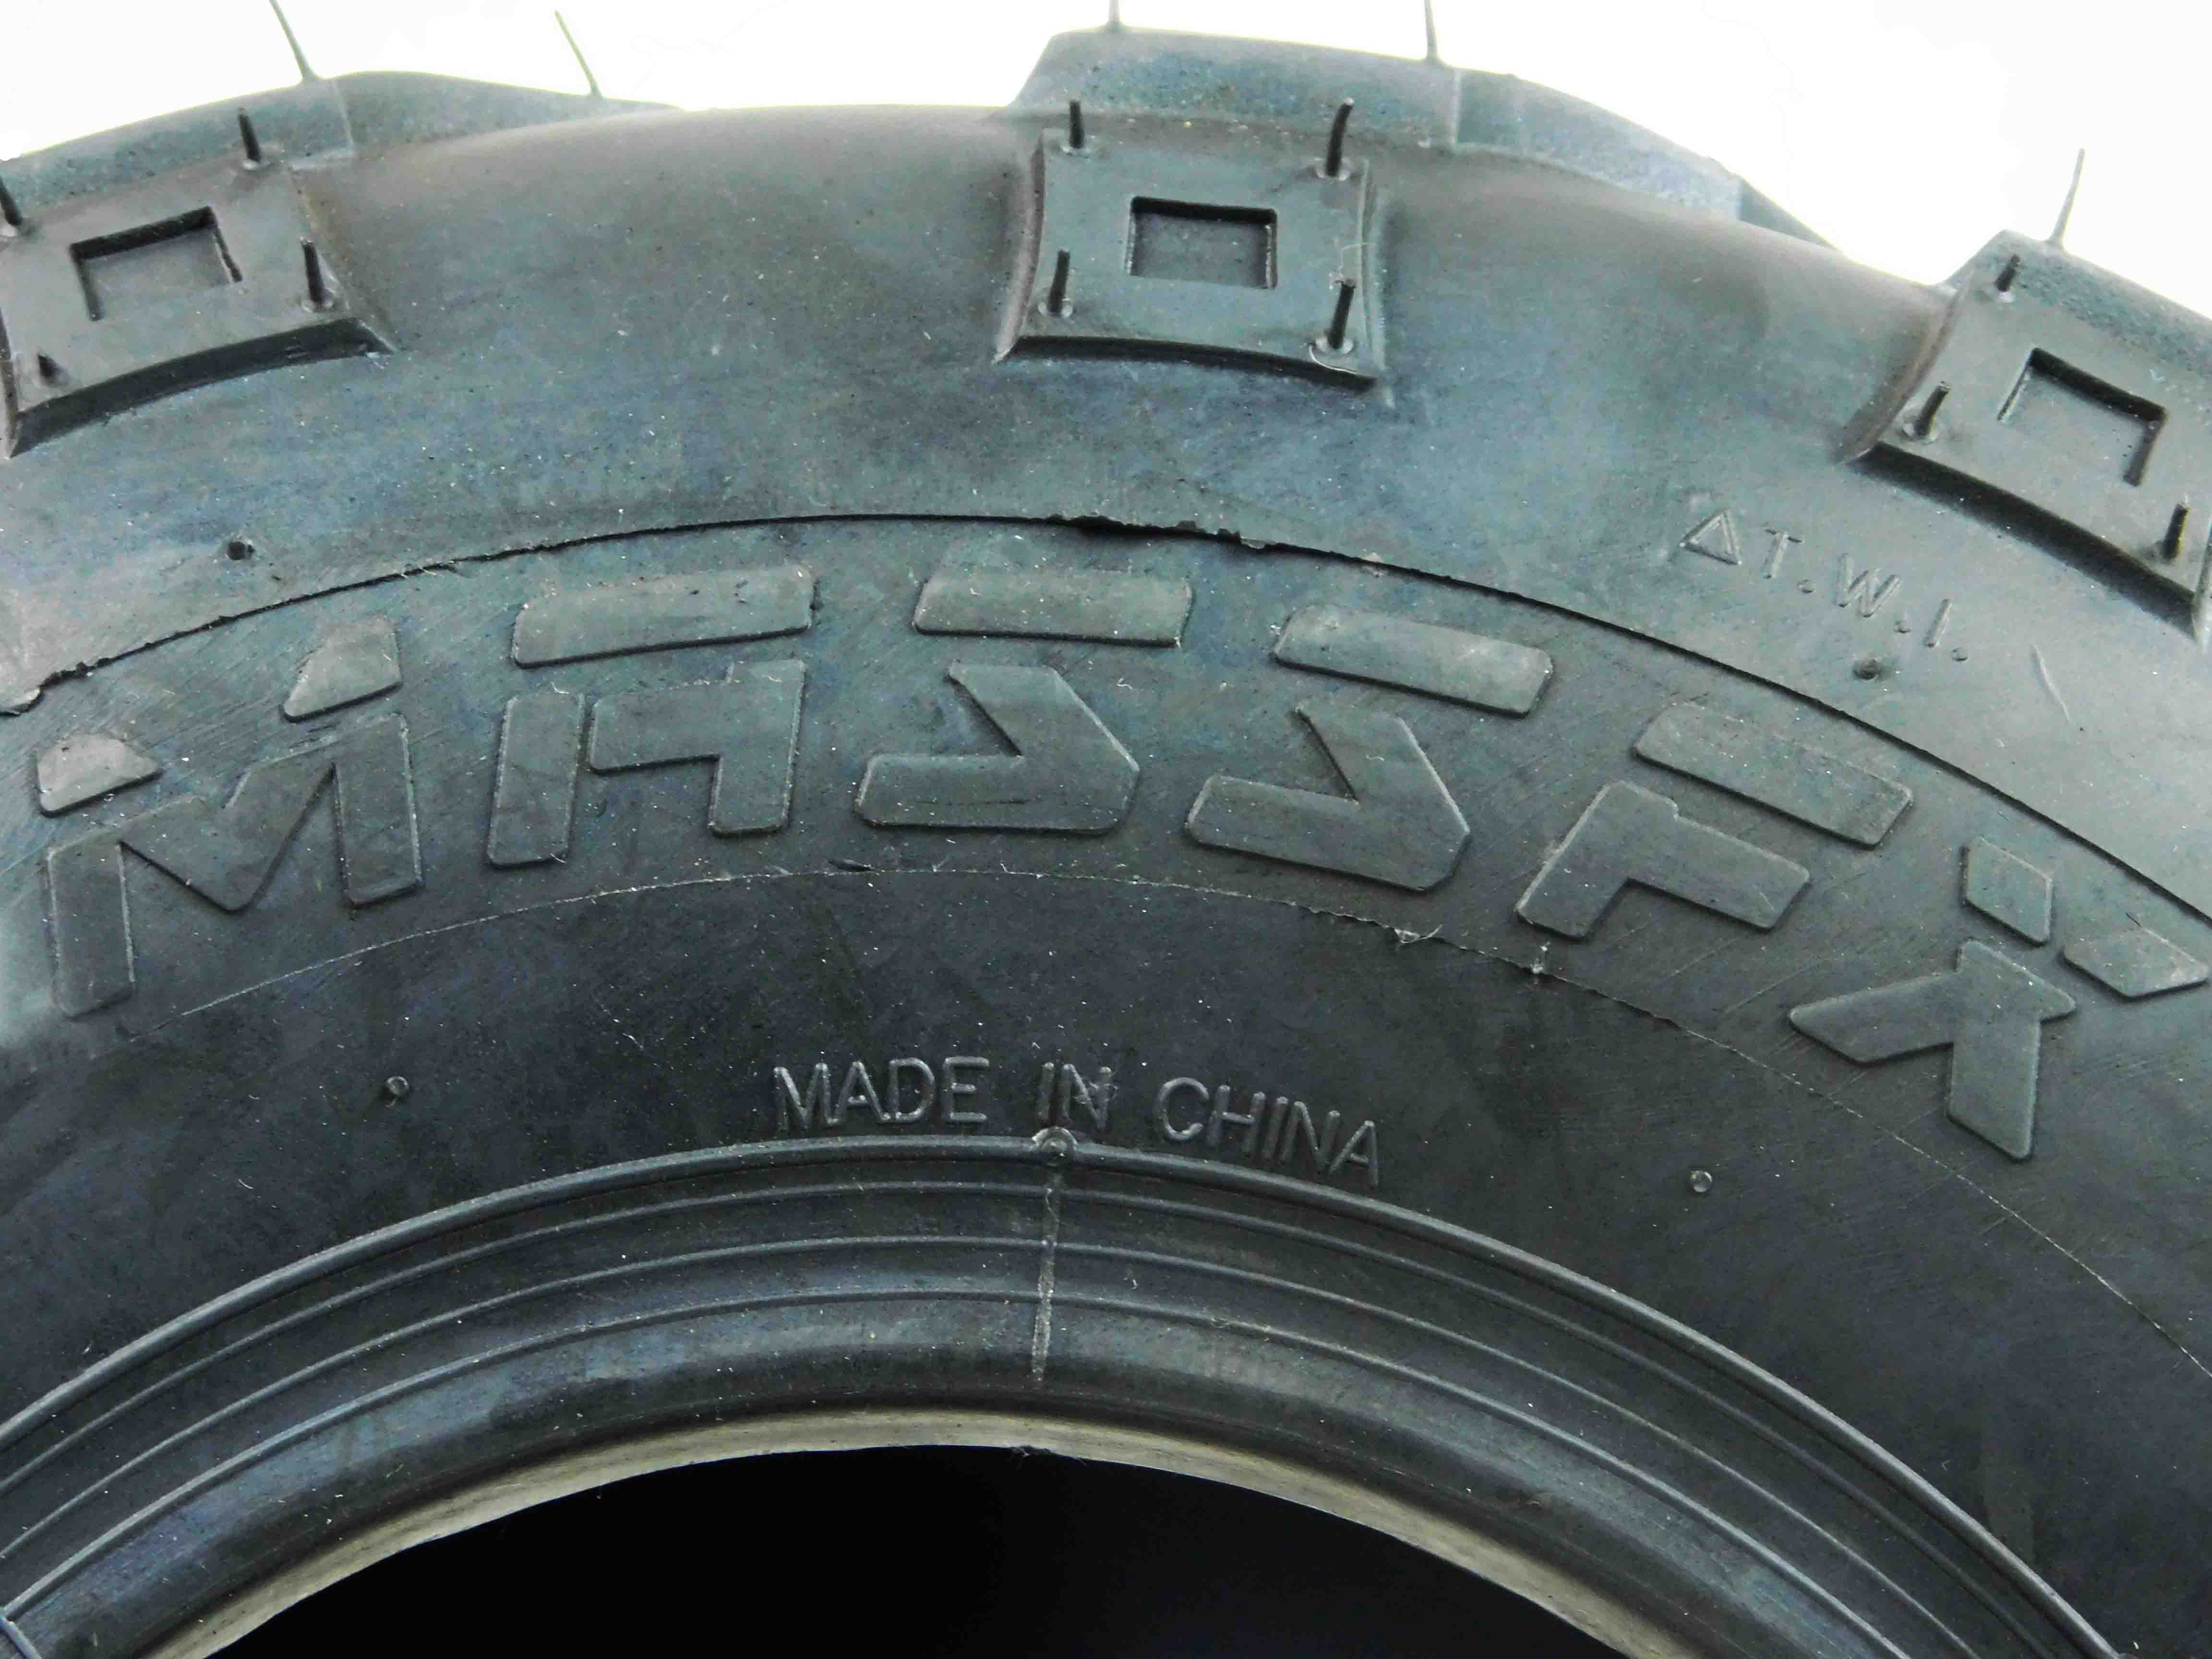 MASSFX Go Kart/ATV Tires 4 set 145x70-6 4Ply